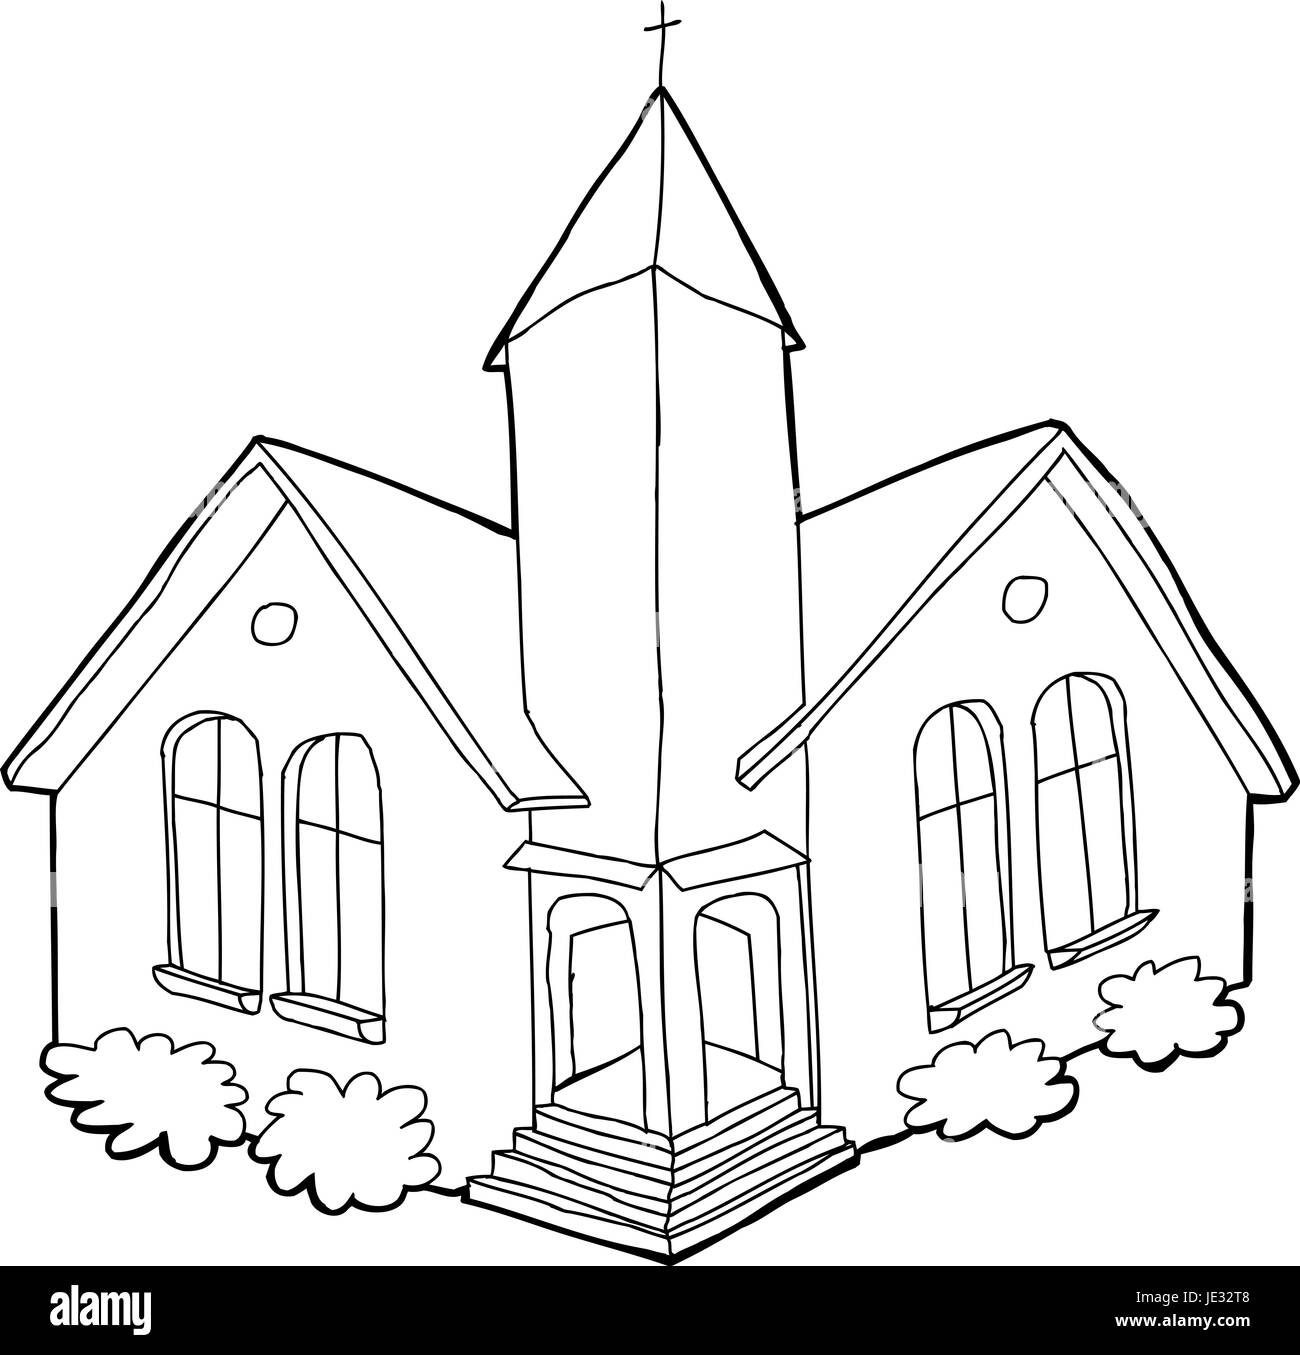 Iglesia dibujo animado Imágenes de stock en blanco y negro - Alamy